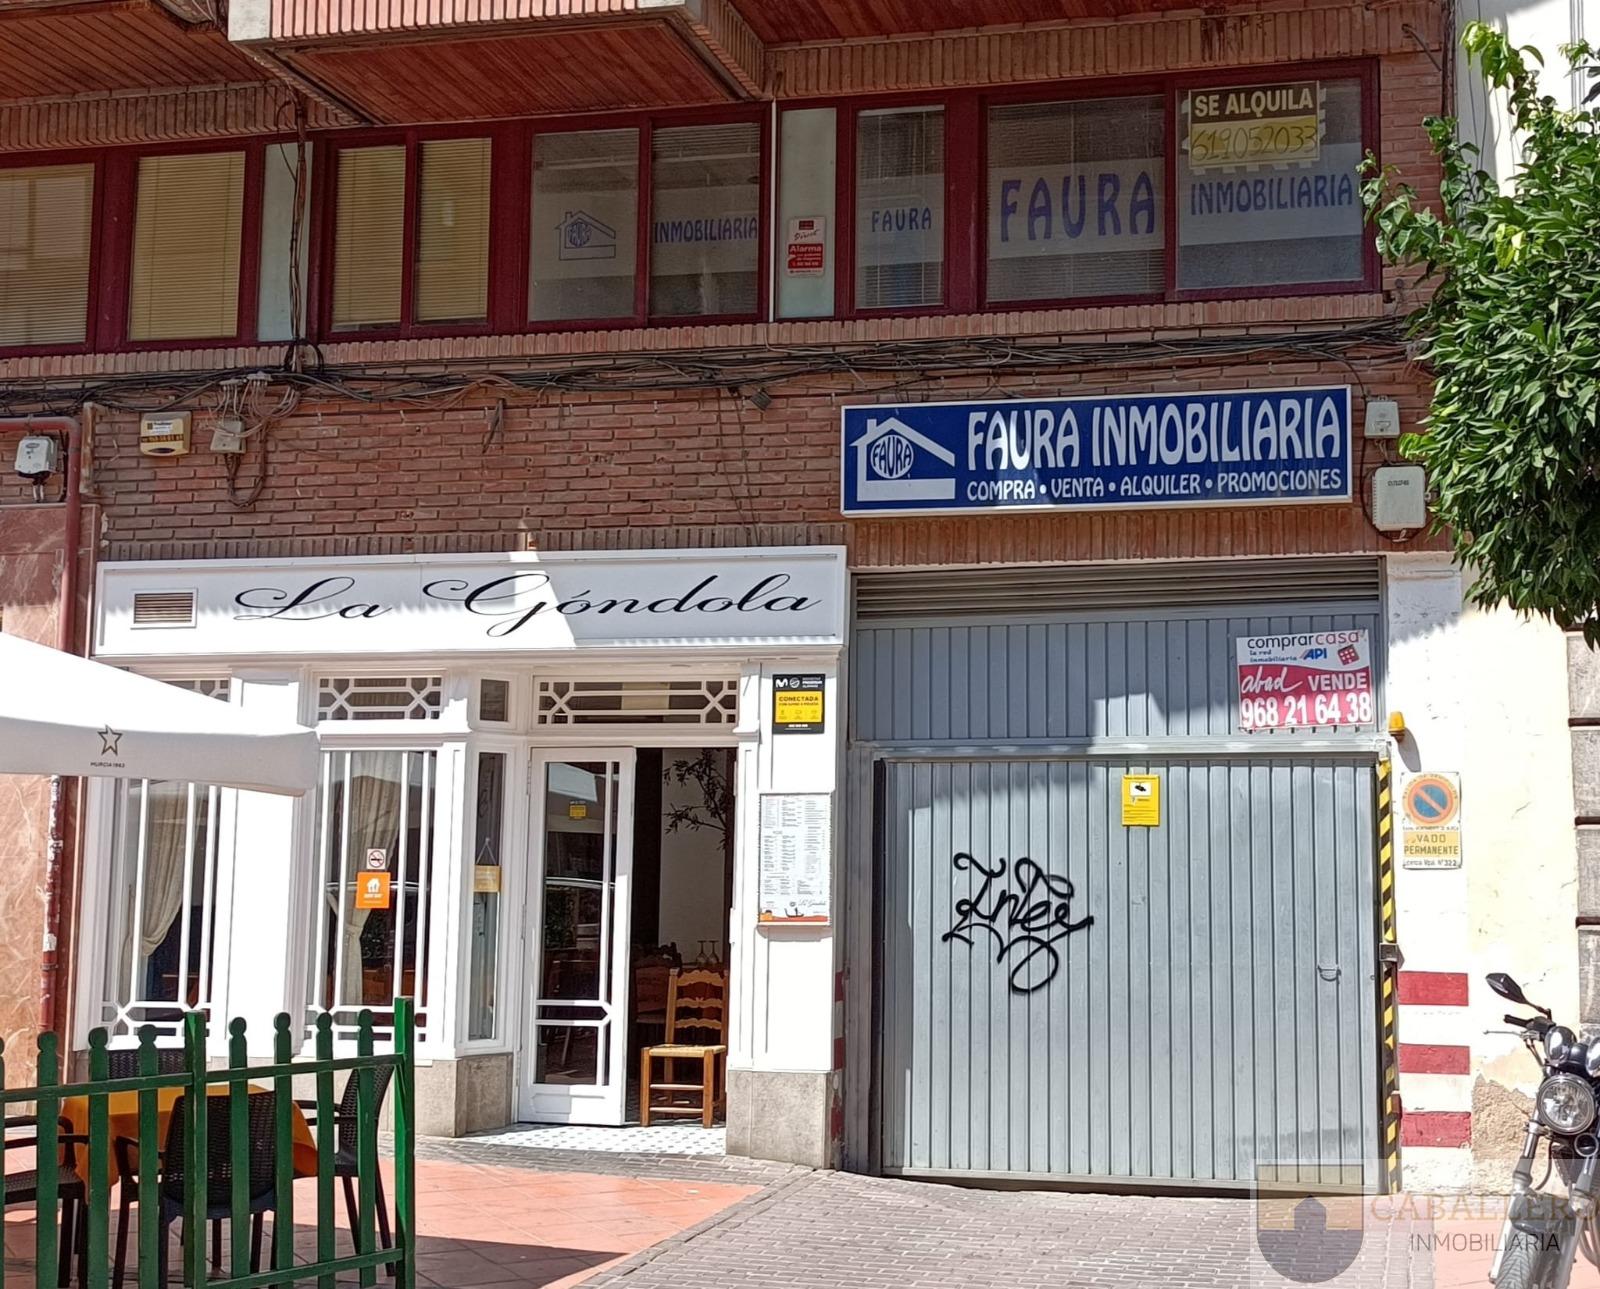 Alquiler de oficina en Murcia